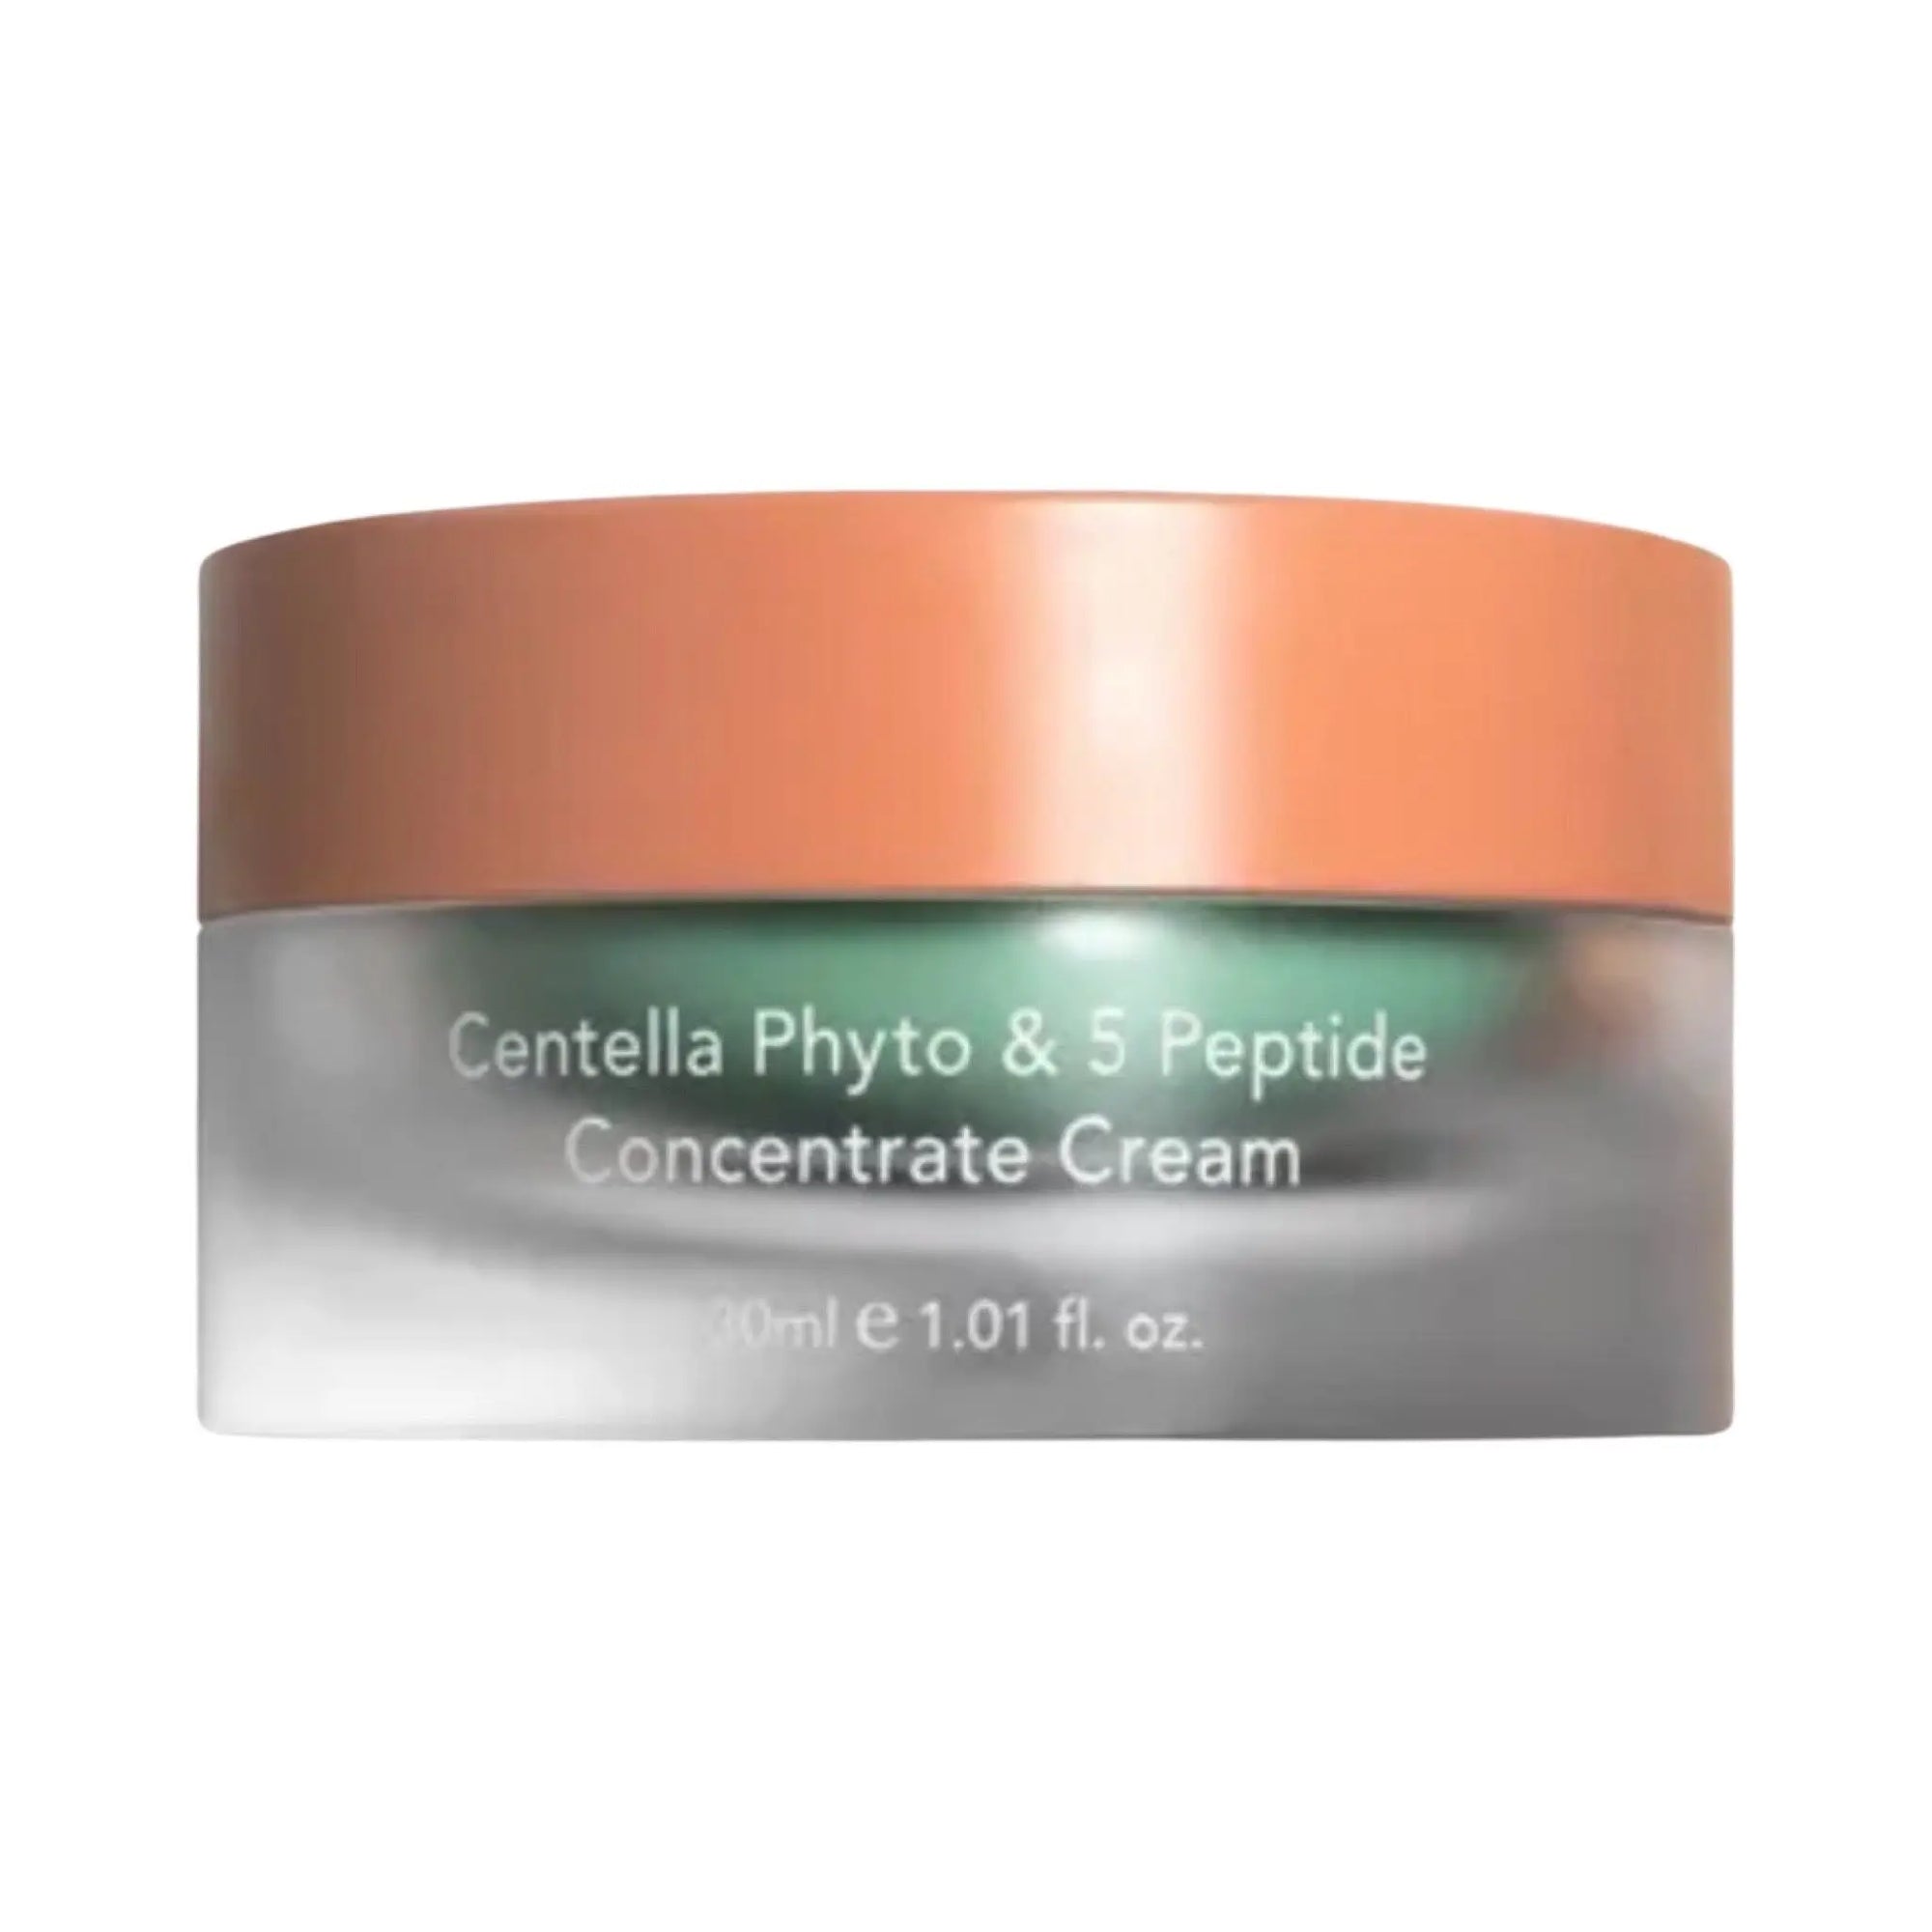 Haruharu Wonder - Centella Phyto & 5 Peptide Concentrate Cream 30mL Haruharu Wonder